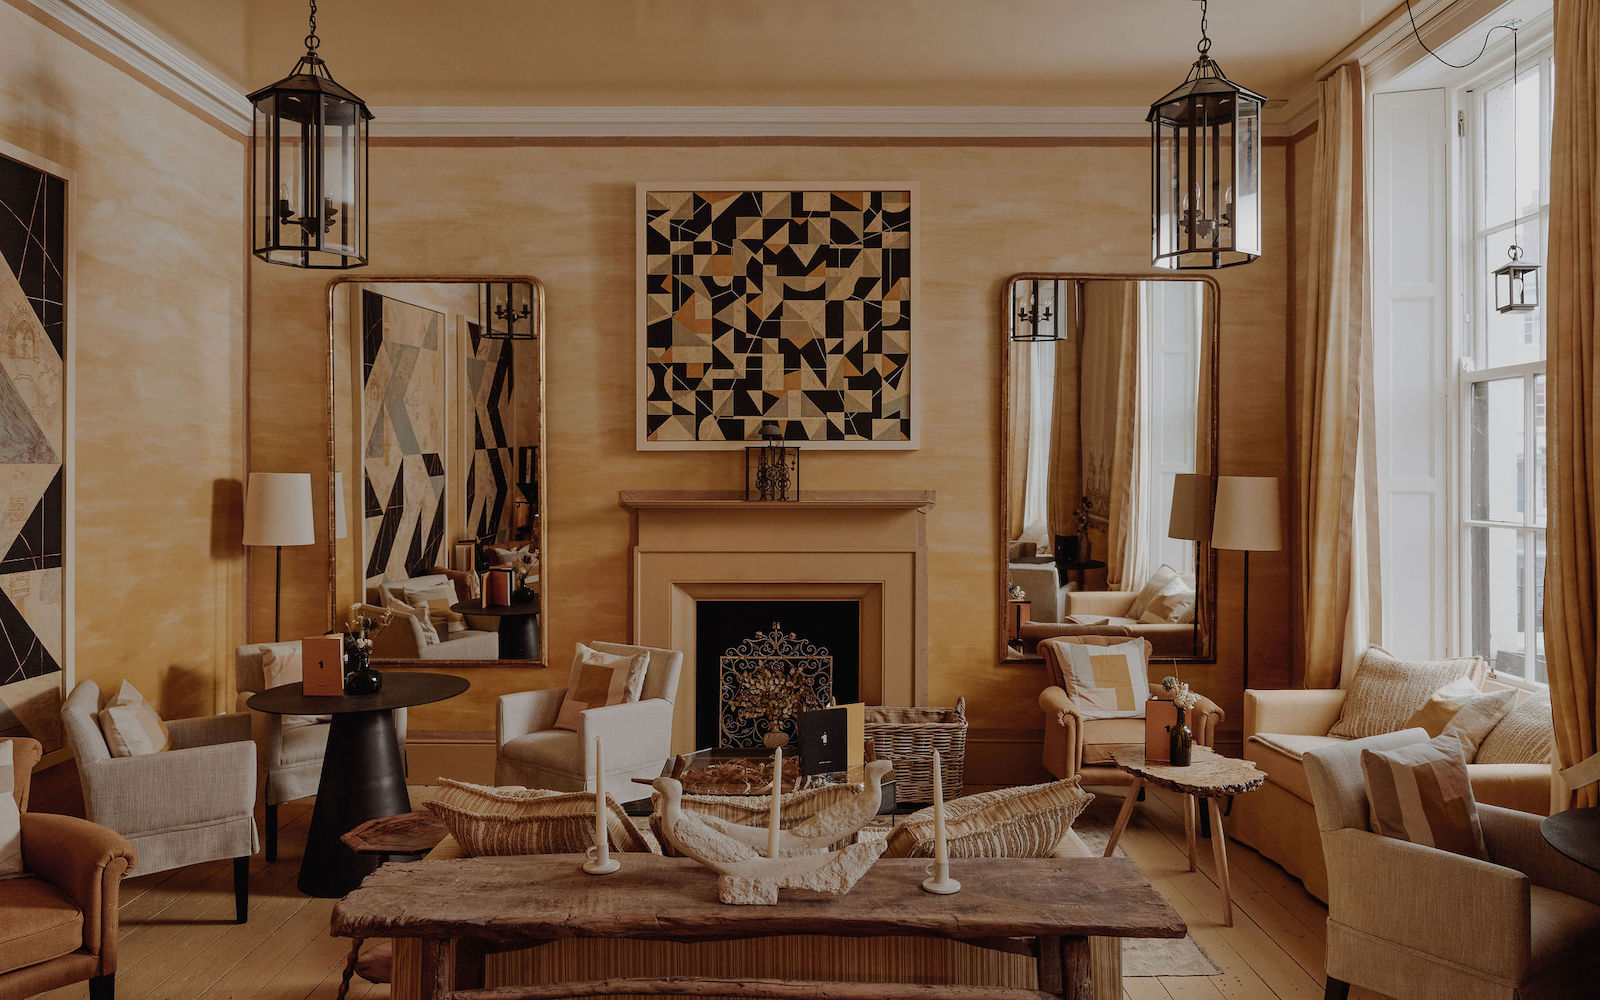 Marmalade Lounge - a quaint English lounge with beige interior design scheme